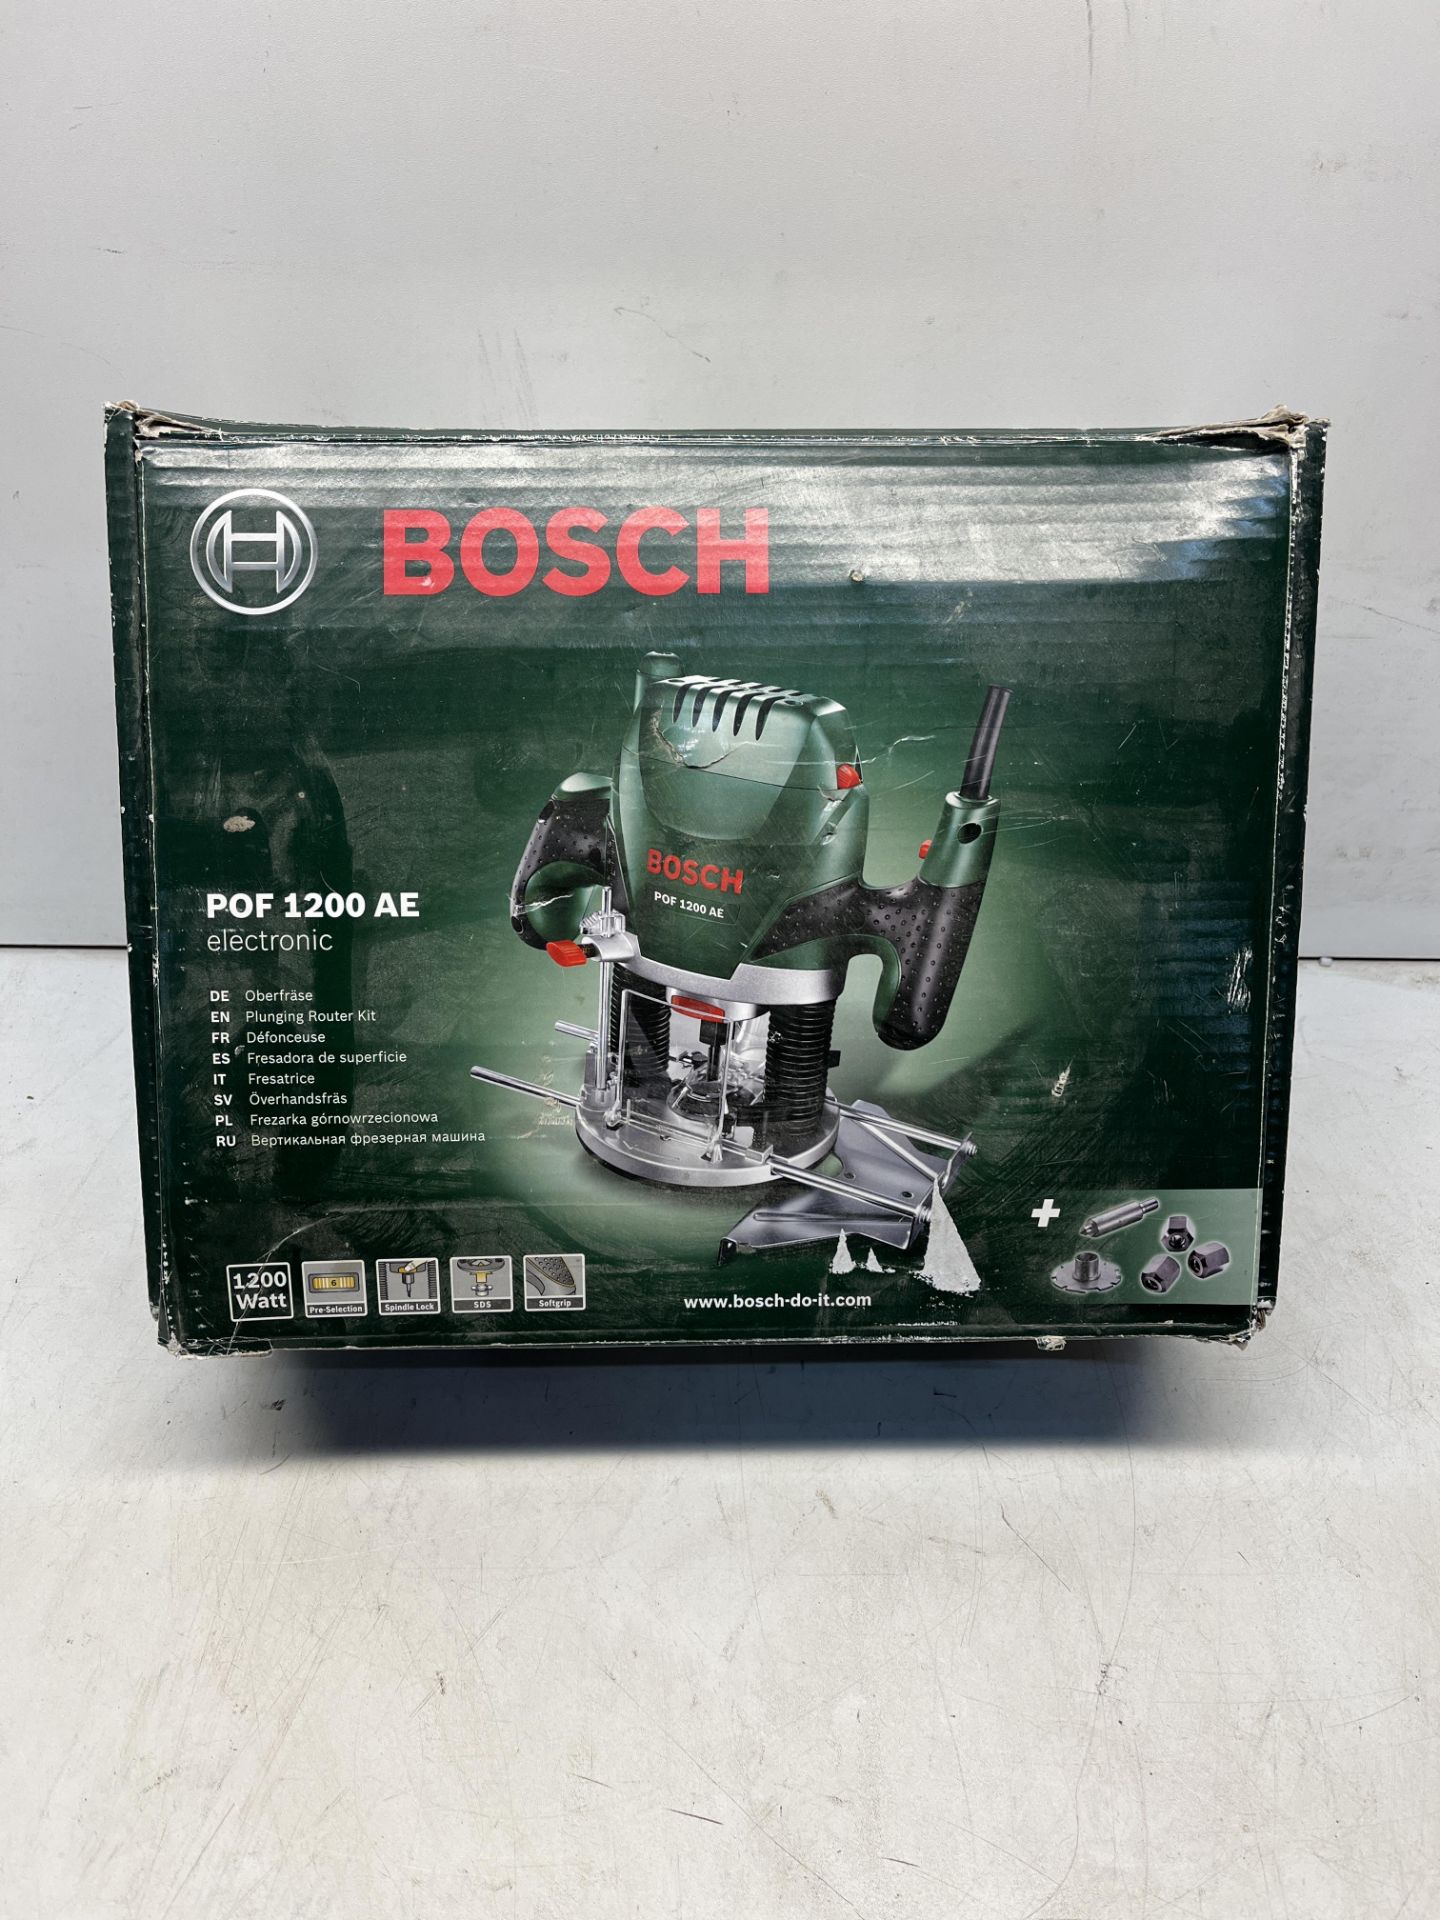 Bosch POF 1200 AE router